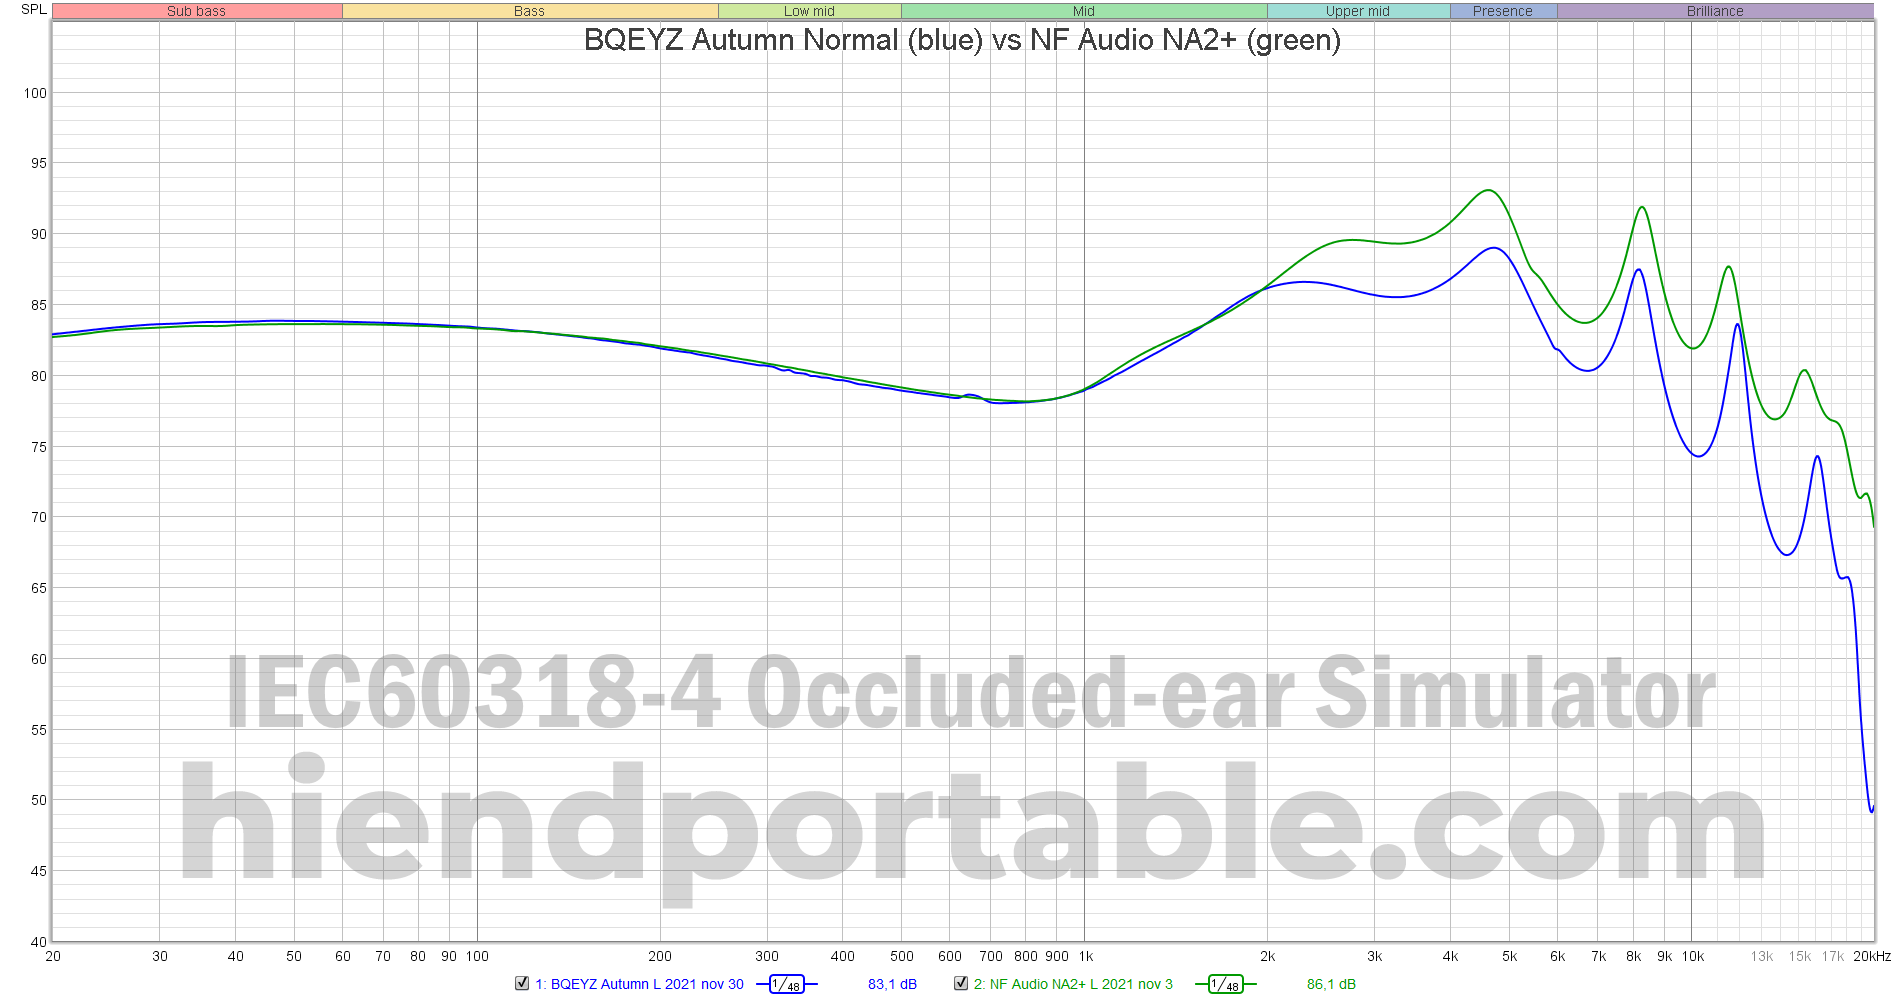 BQEYZ-Autumn-Normal-vs-NF-Audio-NA2.png